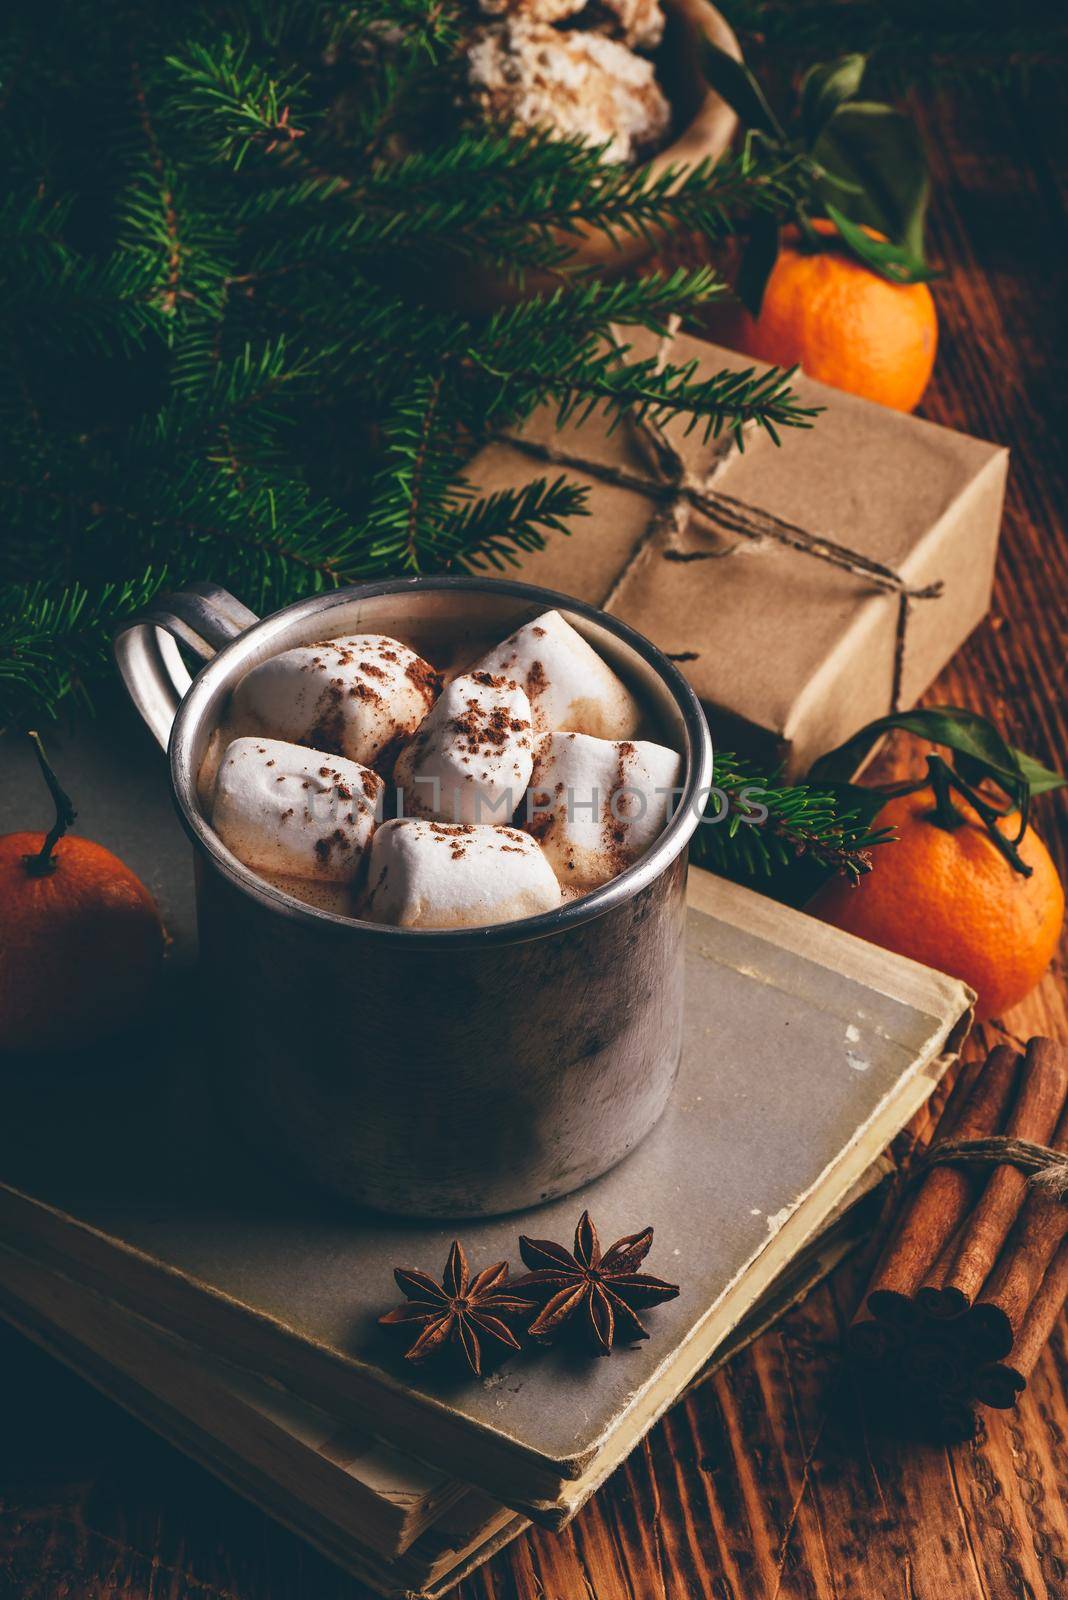 Hot chocolate with marshmallows by Seva_blsv